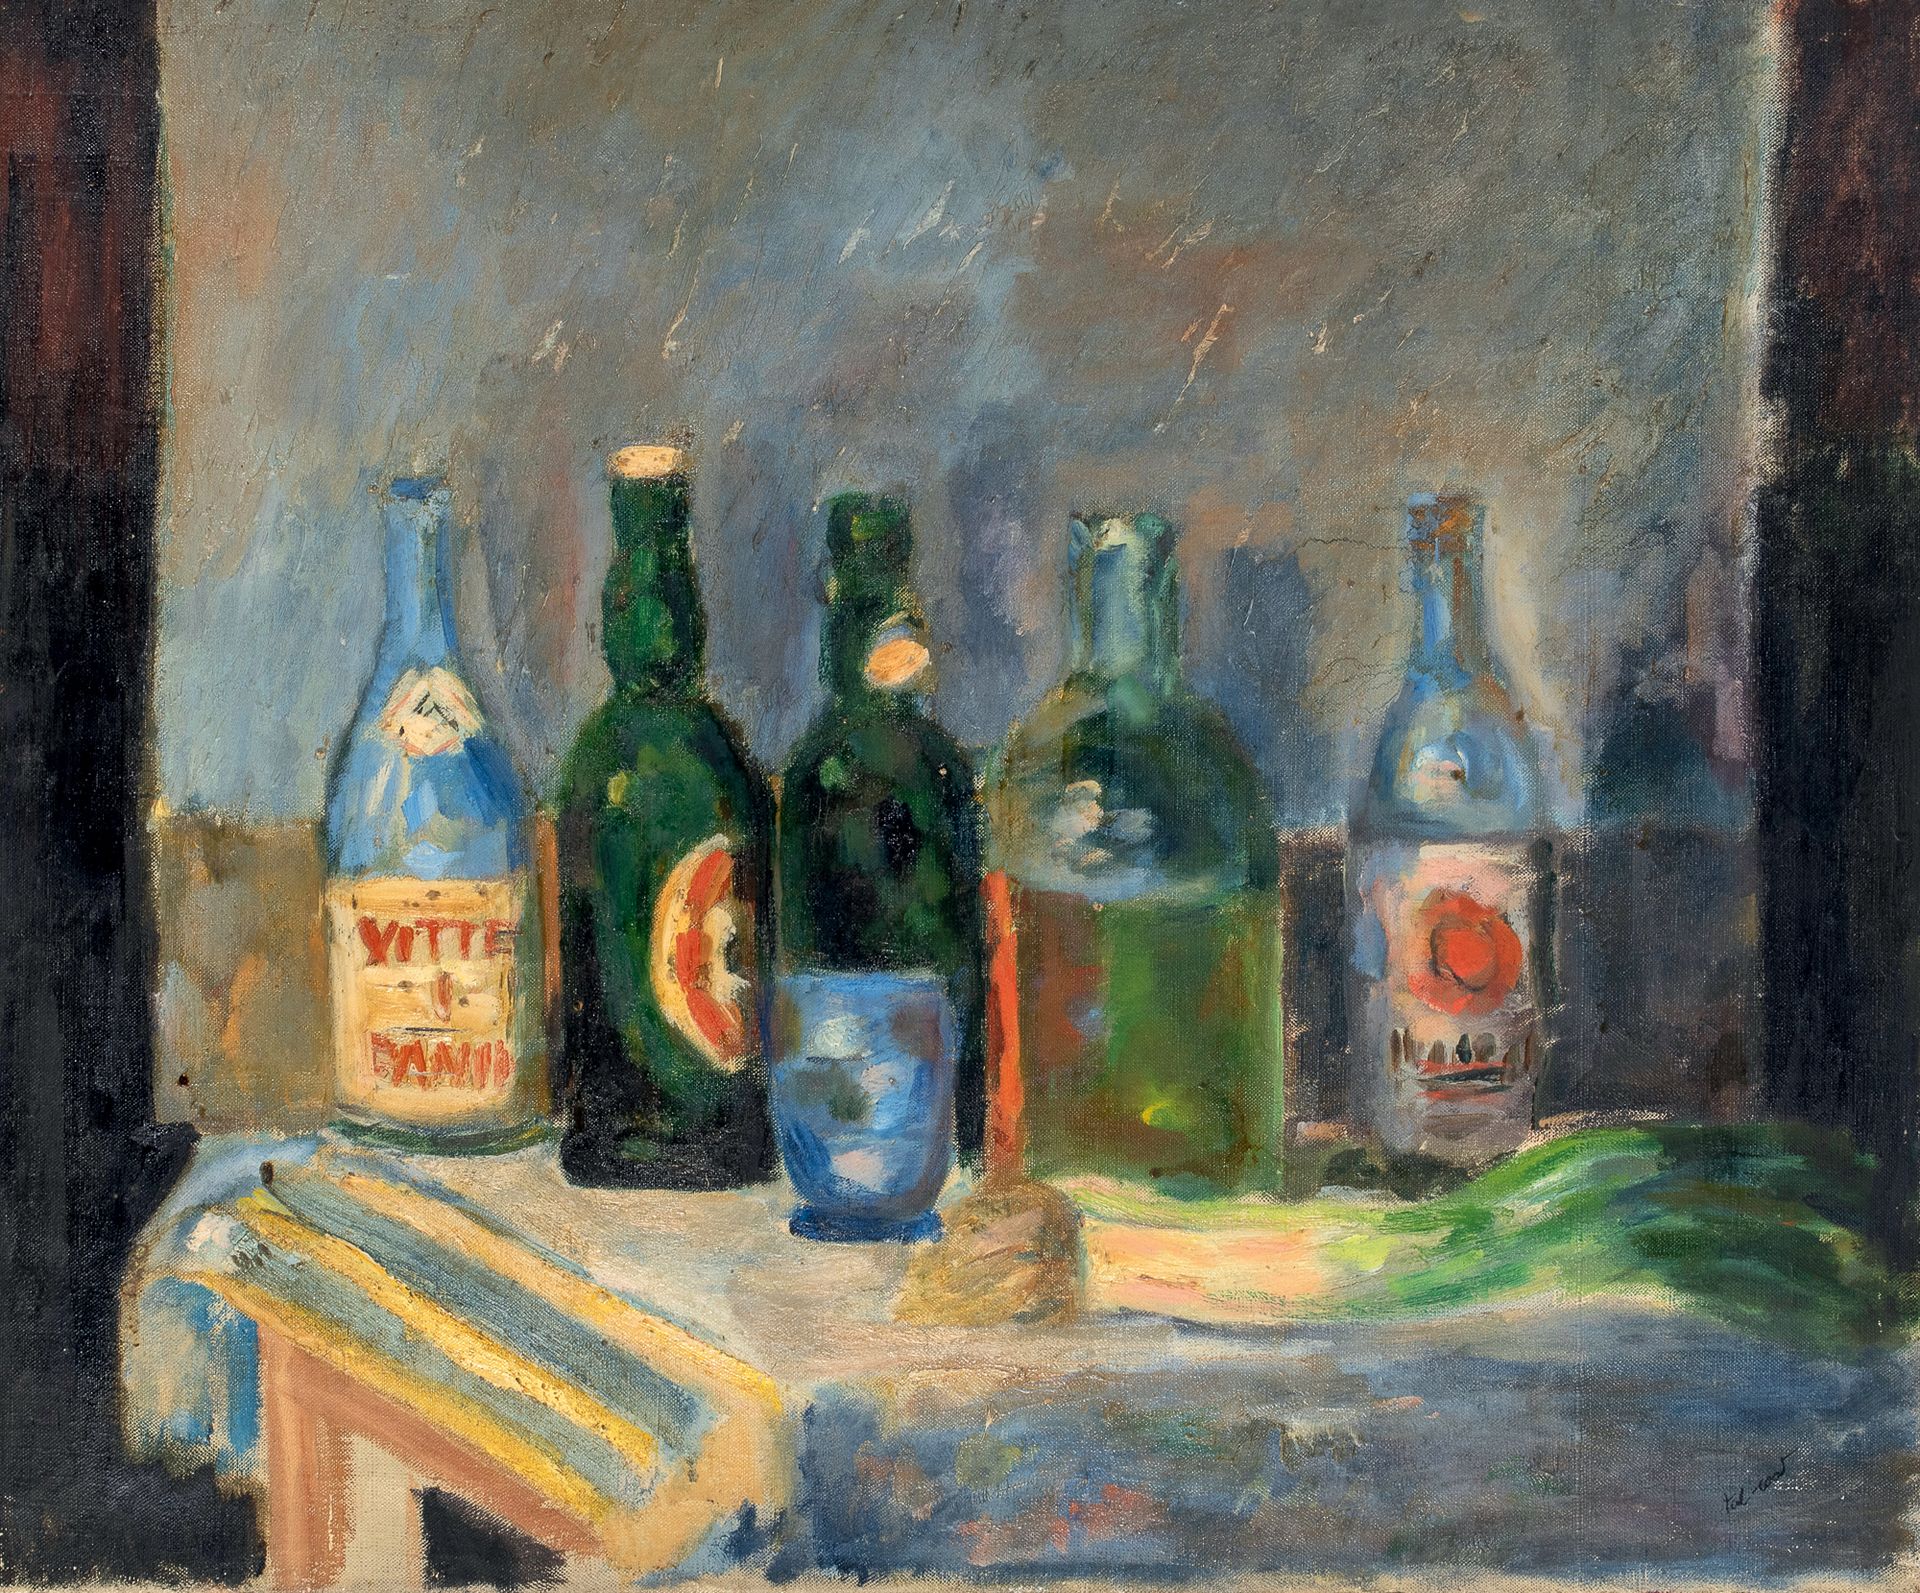 PIERRE TAL COAT (1905-1985) - 静物与瓶子，1928年
布面油画，右下角有签名，左下角有小的模具痕迹 50 x 61 cm